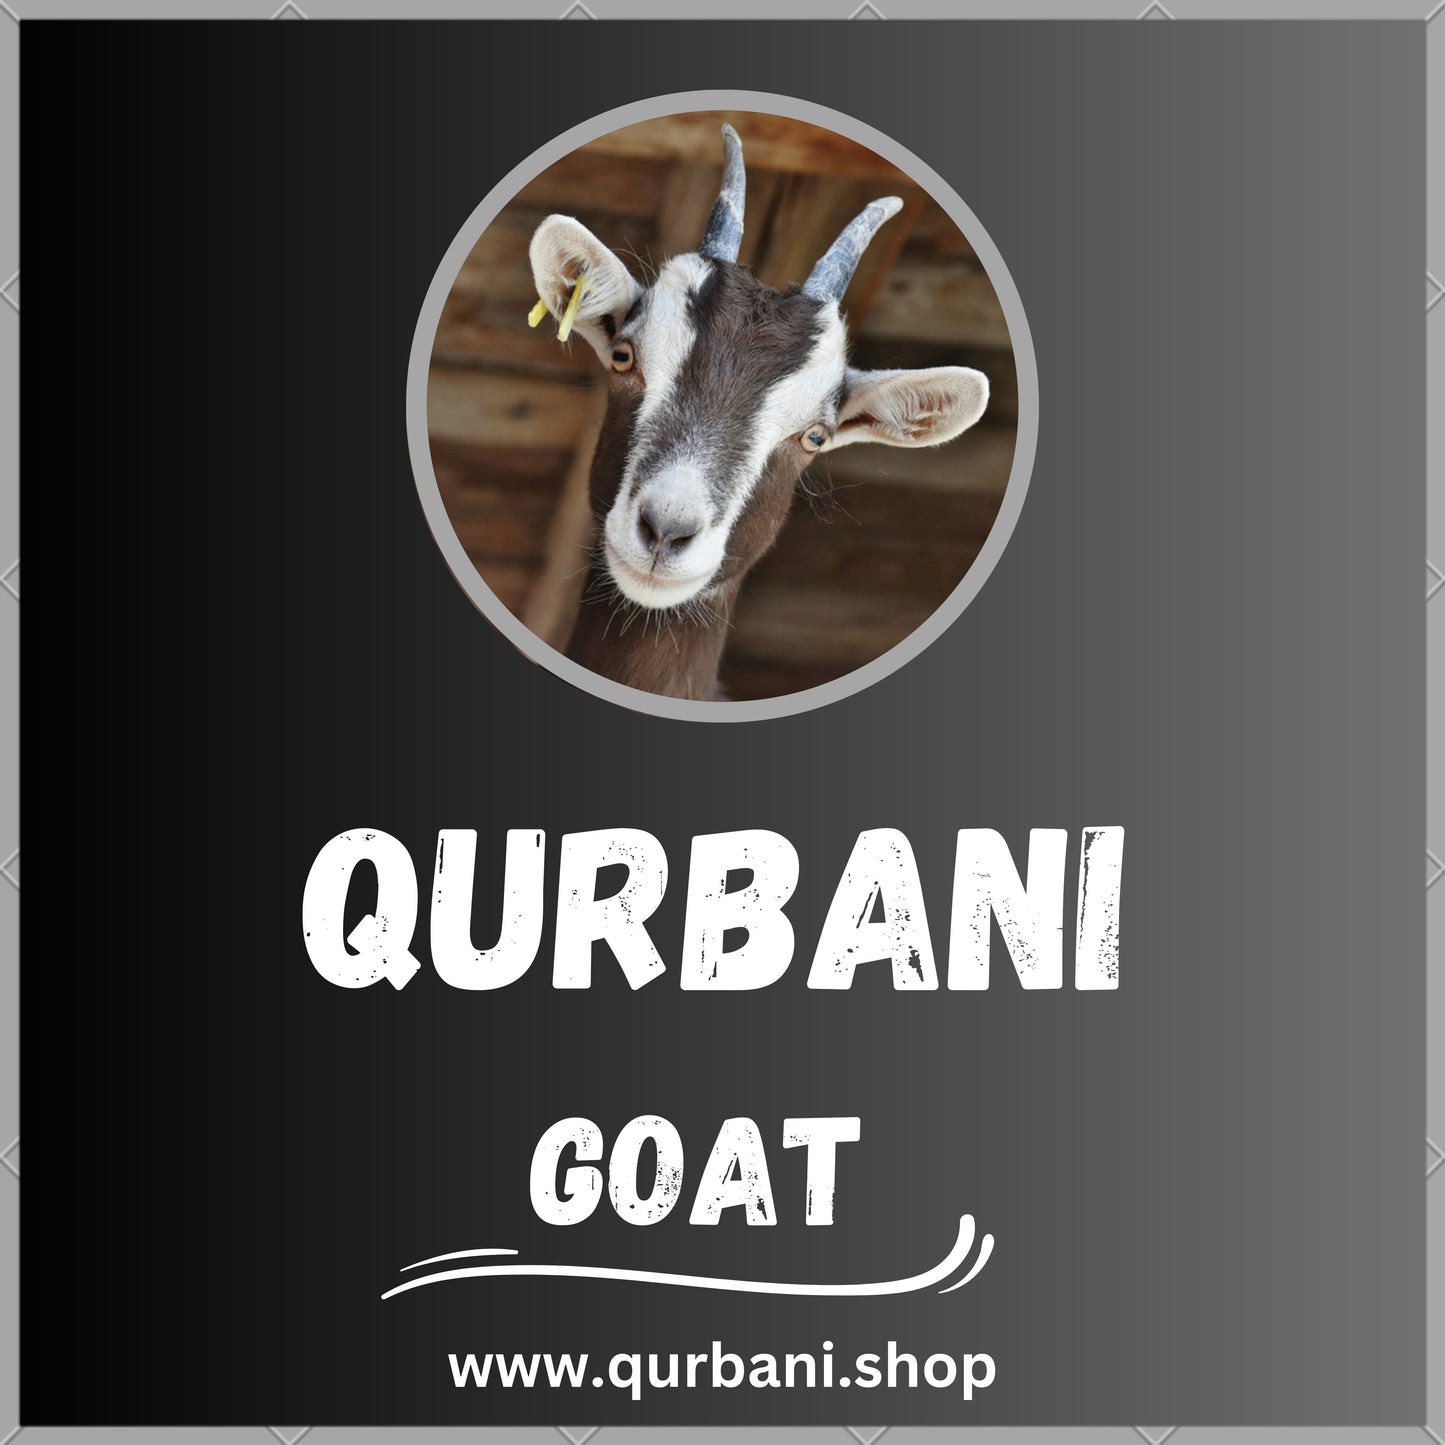 Authentic Pakistan Qurbani Services for Eid - Book Now